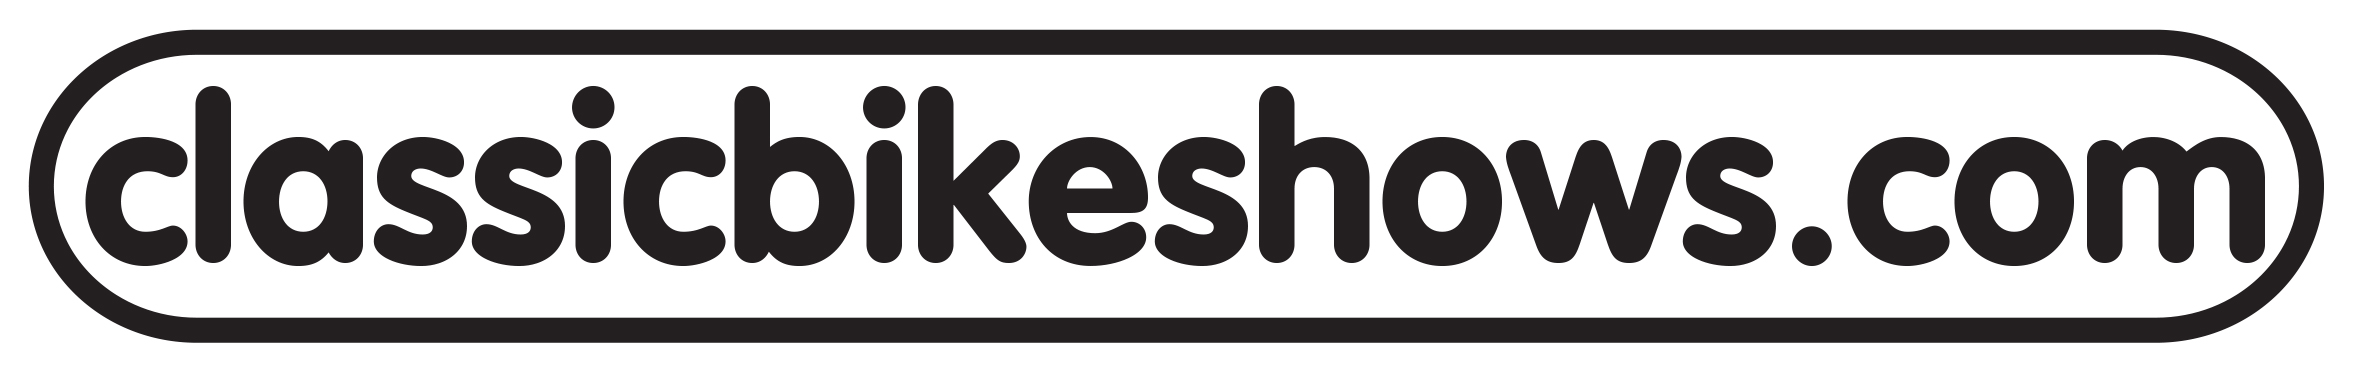 classicbikeshows.com logo